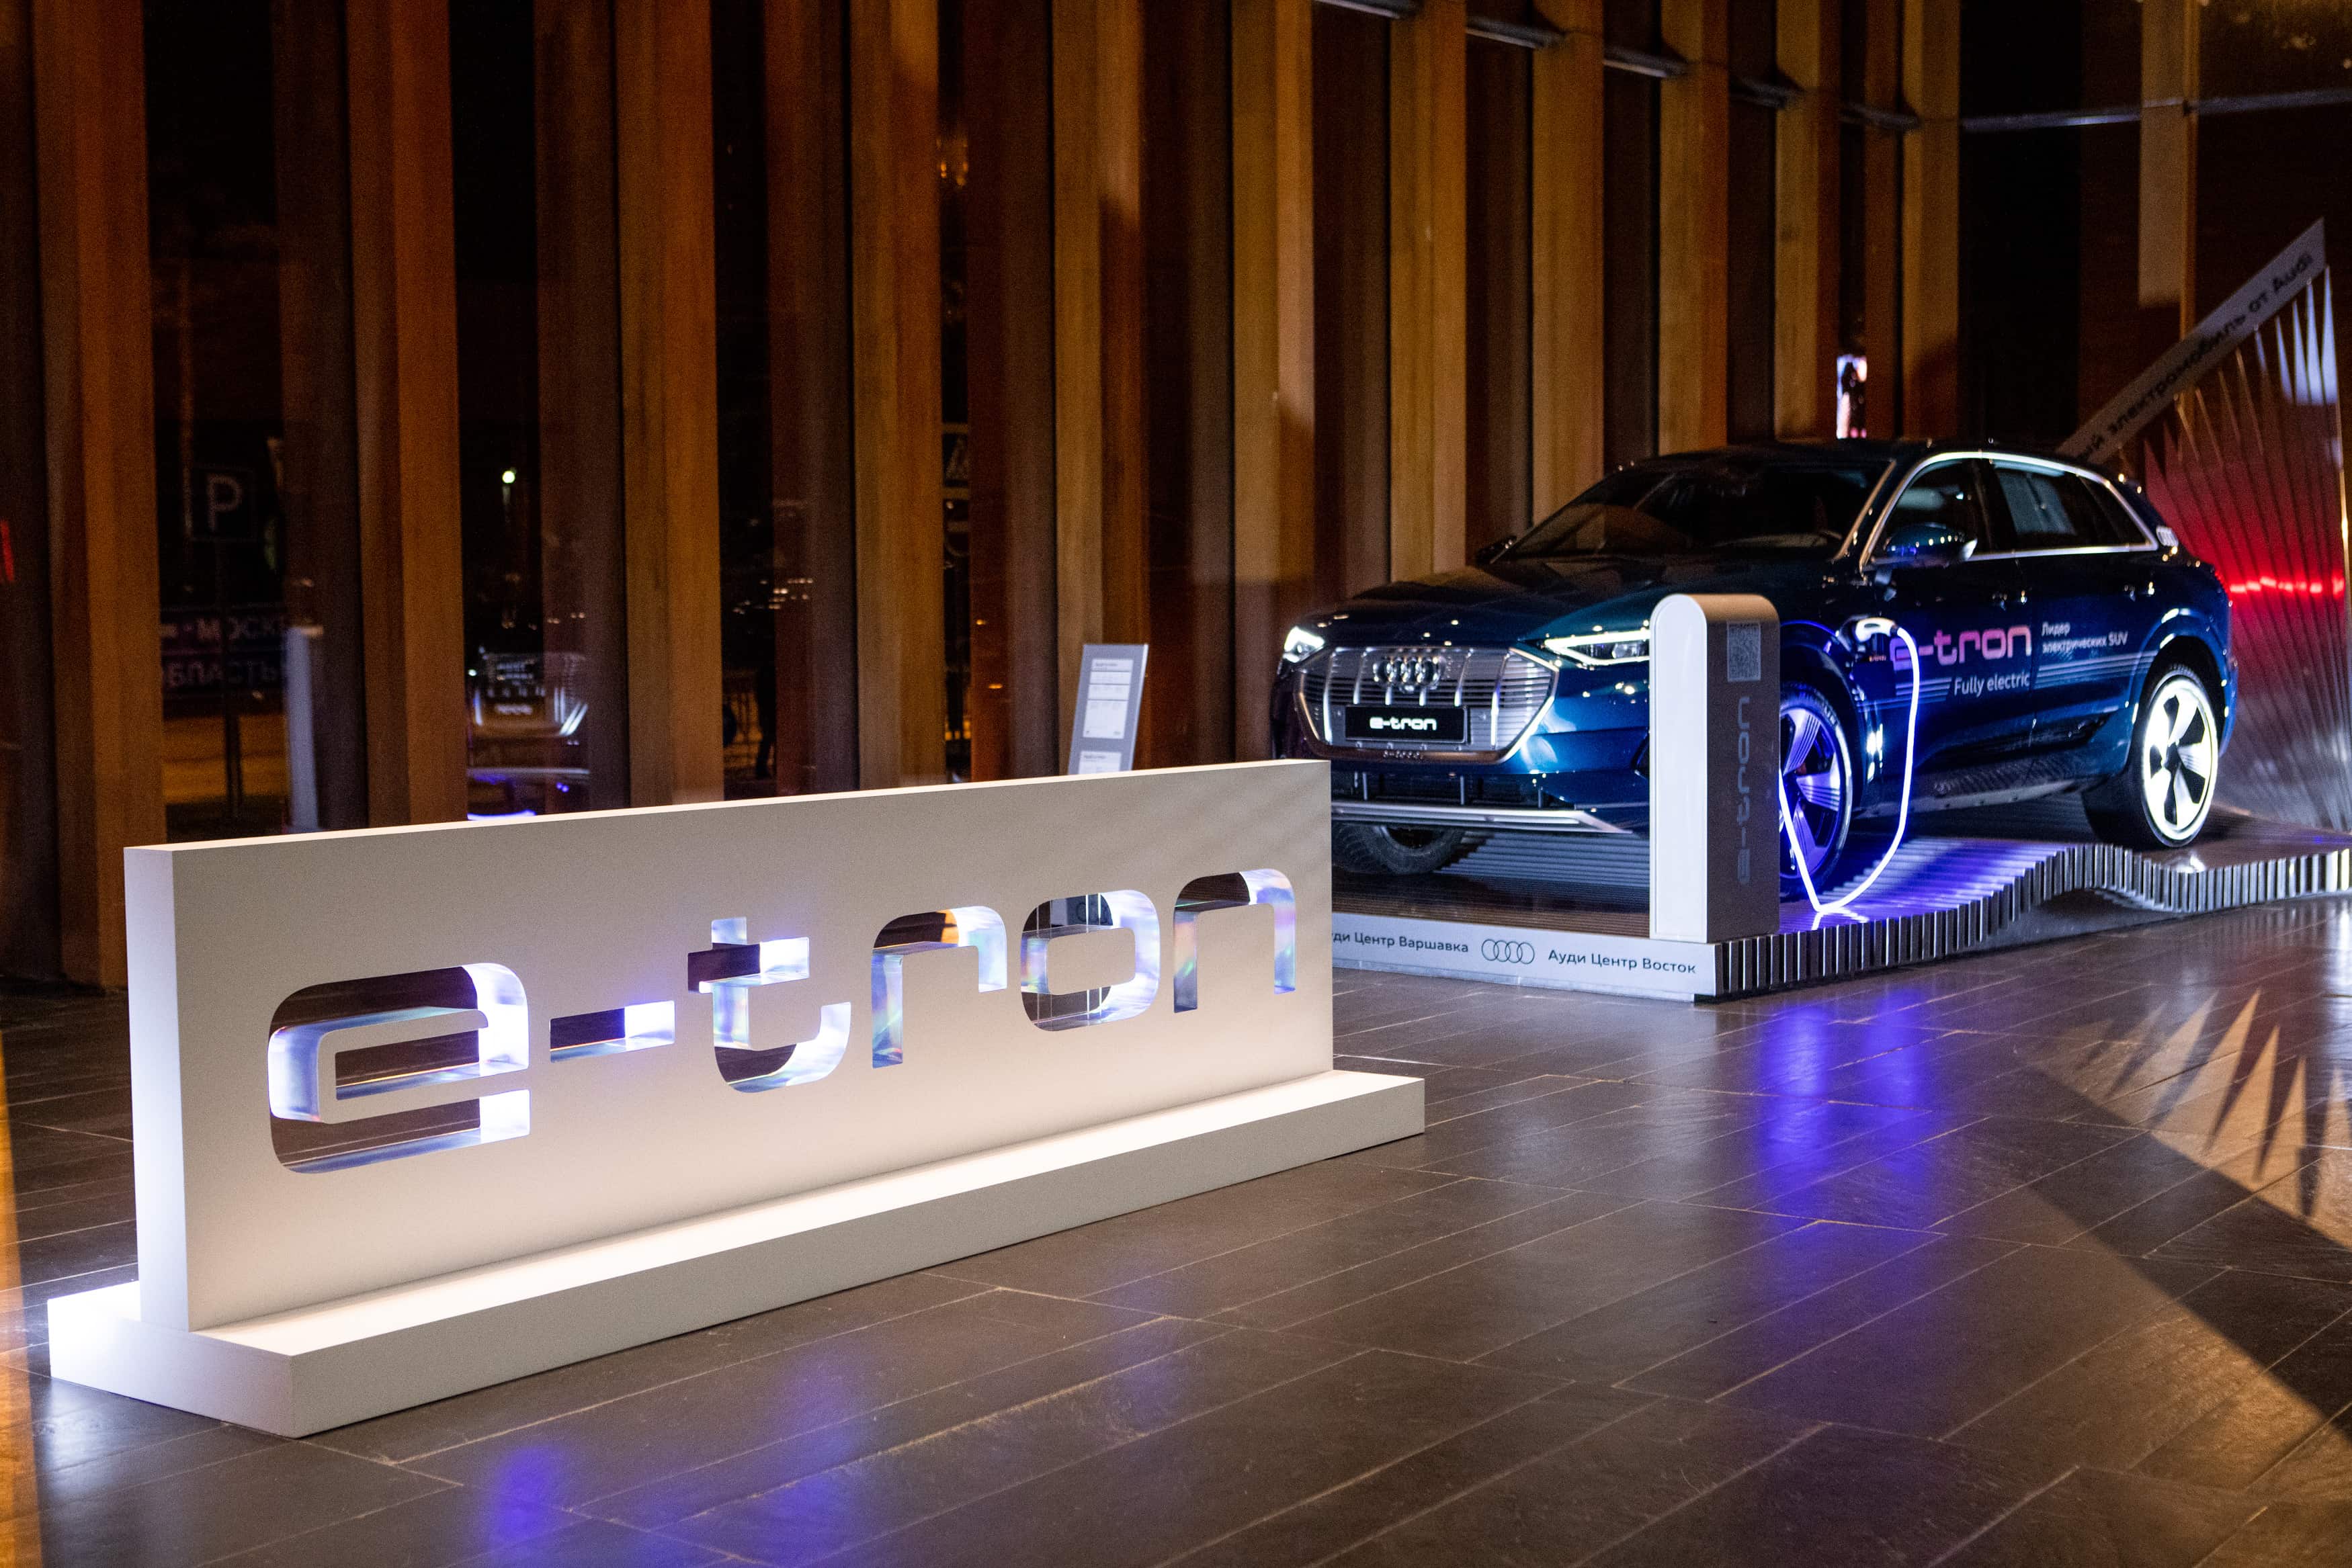 Ауди Центра Таганка, Ауди Центра Варшавка и Ауди Центра Восток представили электрокар Audi e-tron на концерте легендарной поп-группы A’STUDIO